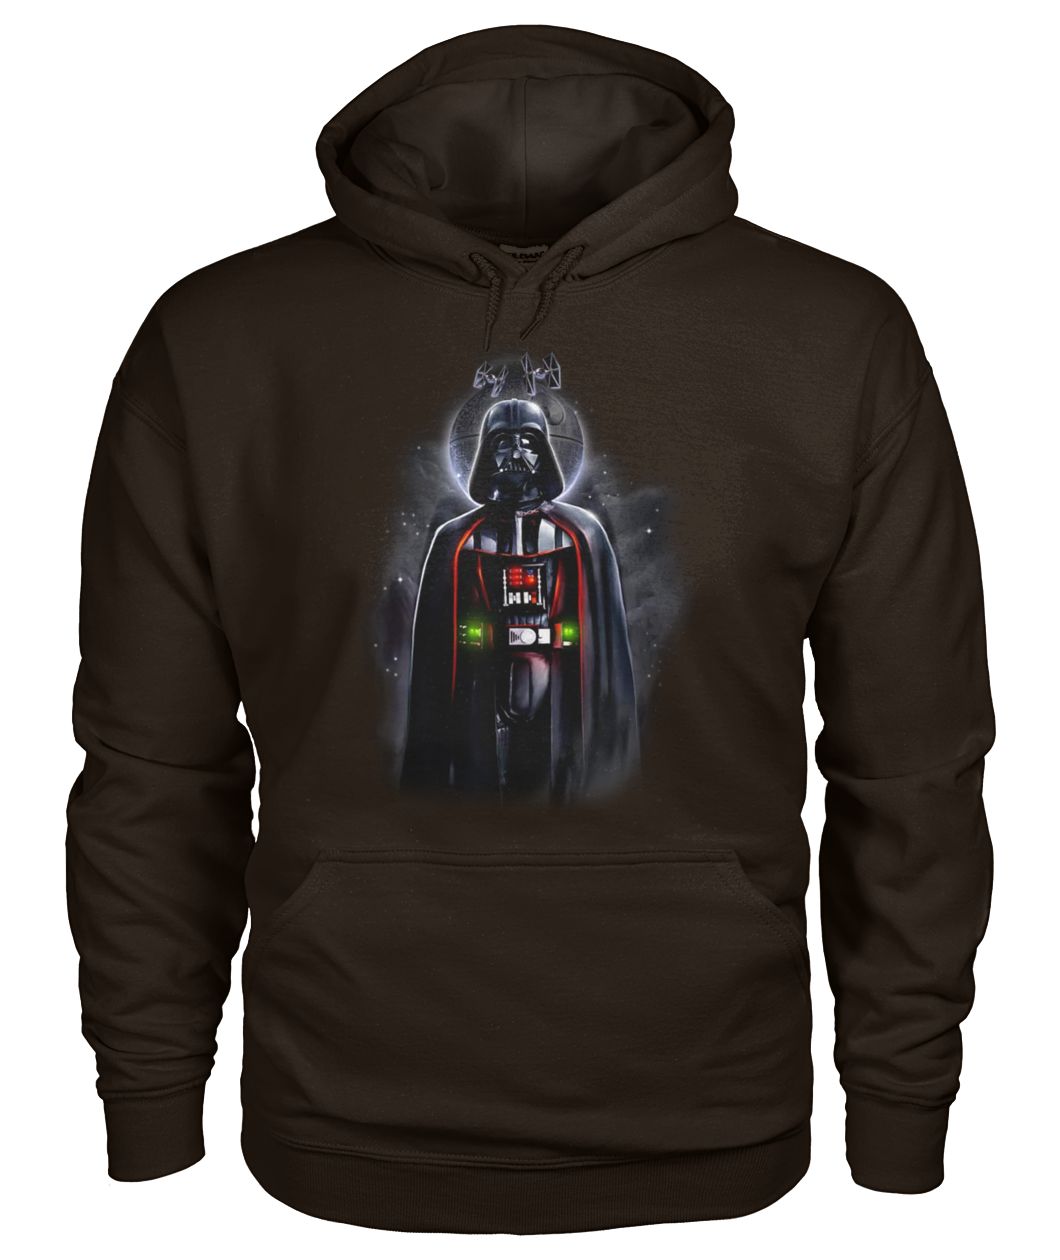 Star wars darth vader with death star portrait gildan hoodie